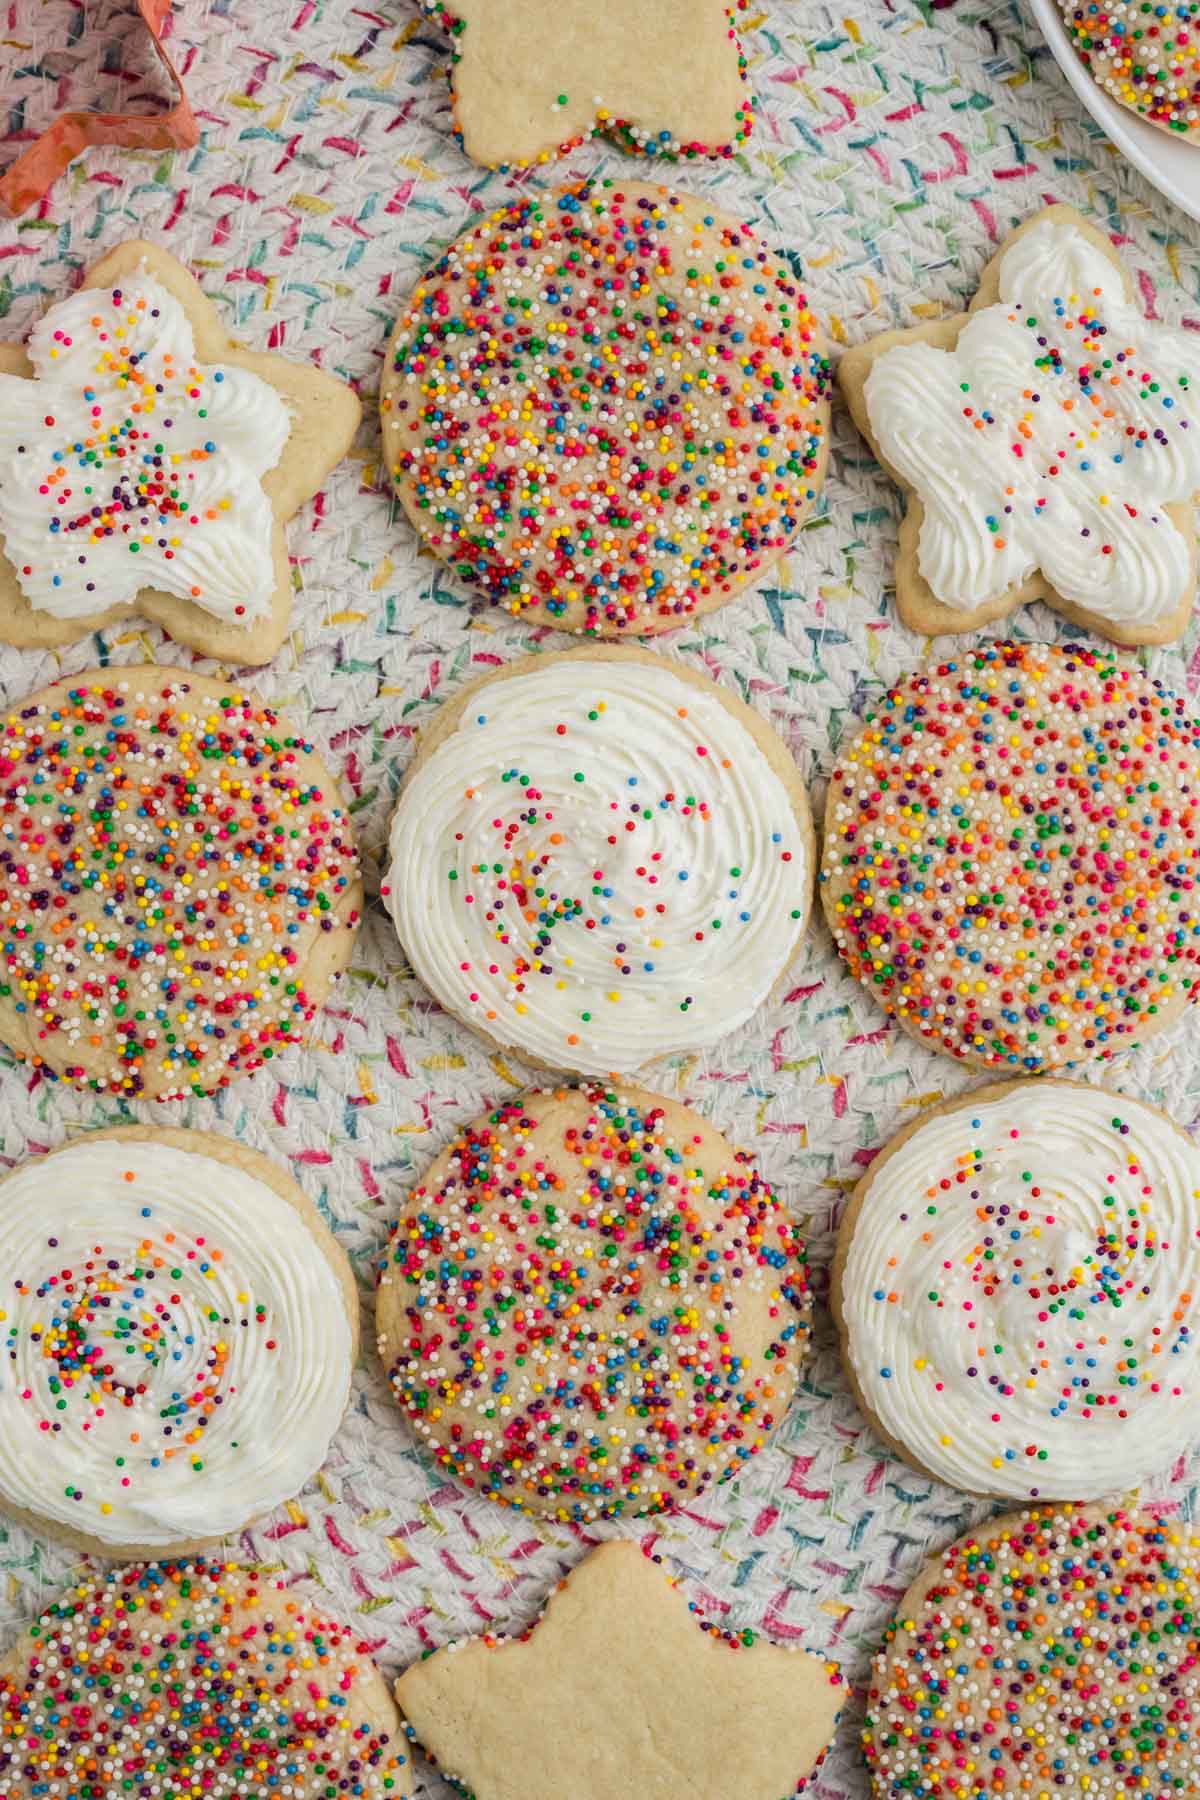 Sugar cookies with frosting and sprinkles.